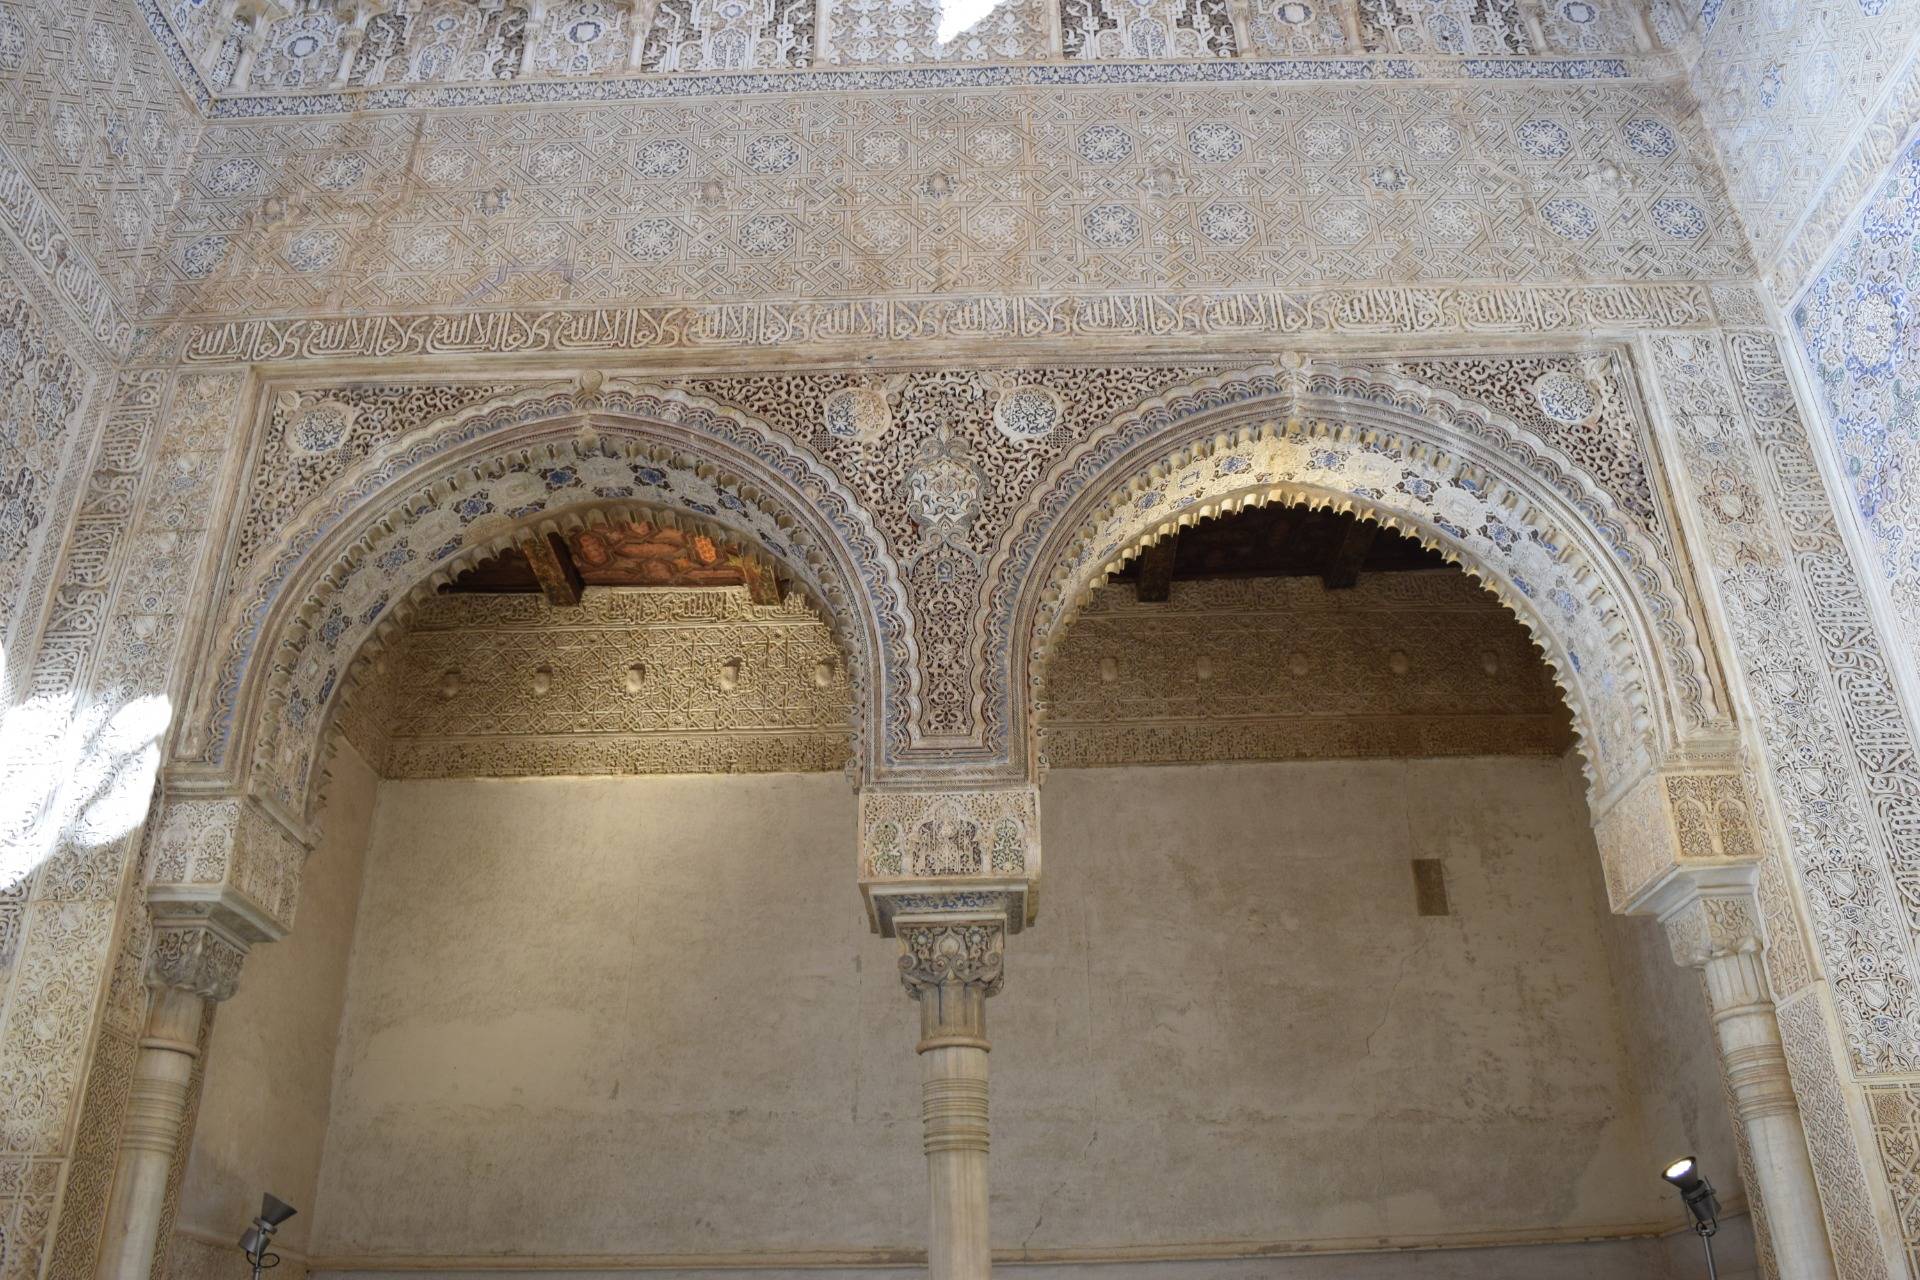 Archways with arab influenced artwork